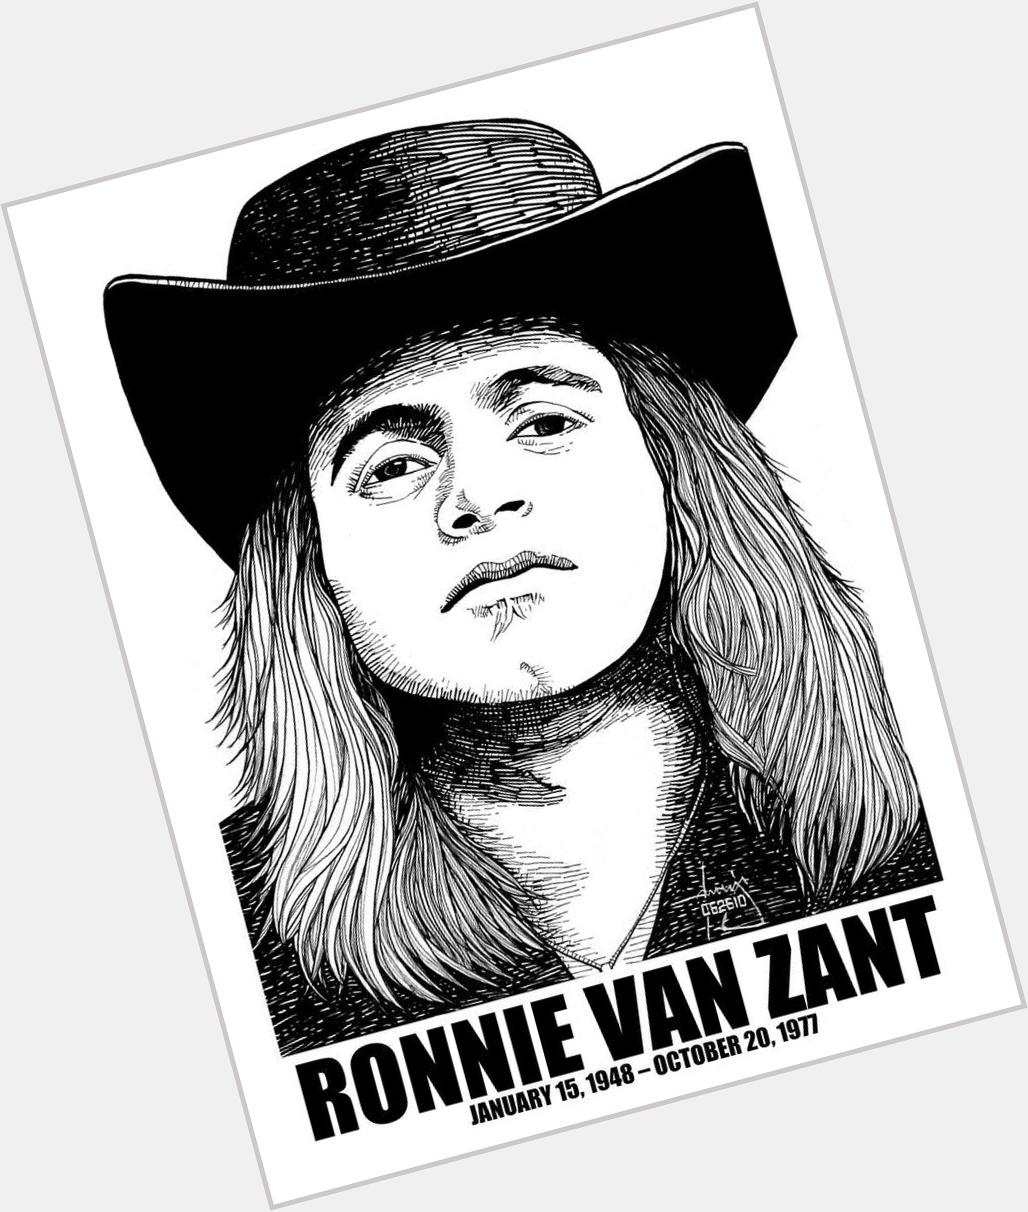 Happy birthday Ronnie van zant!! 